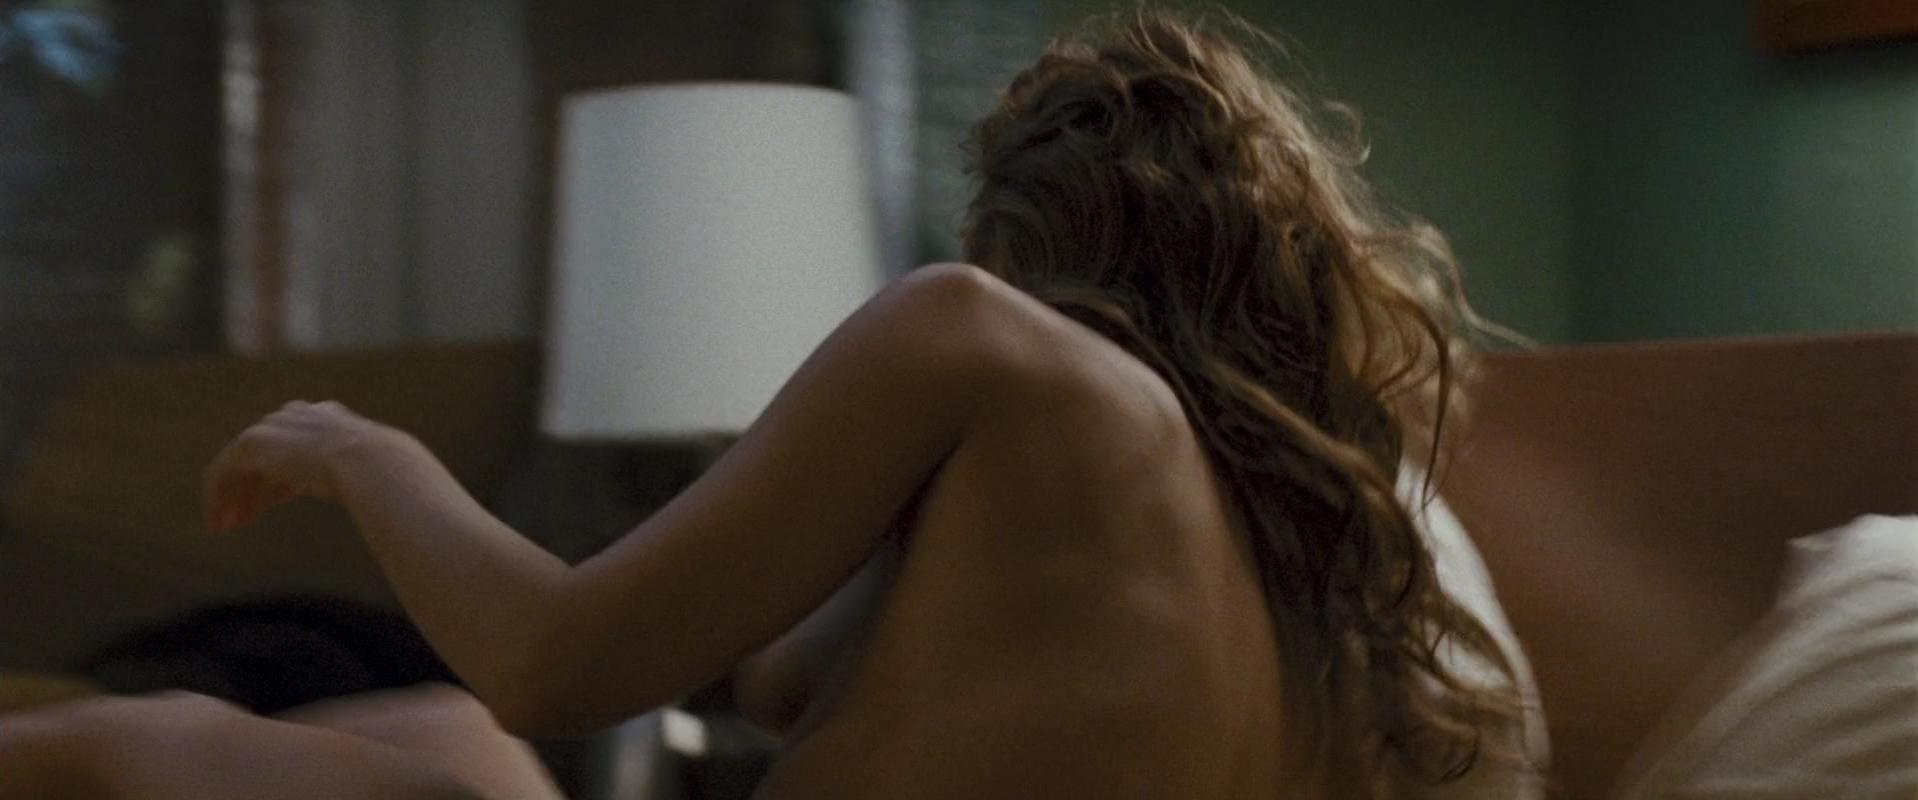 Jennifer esposito nudes